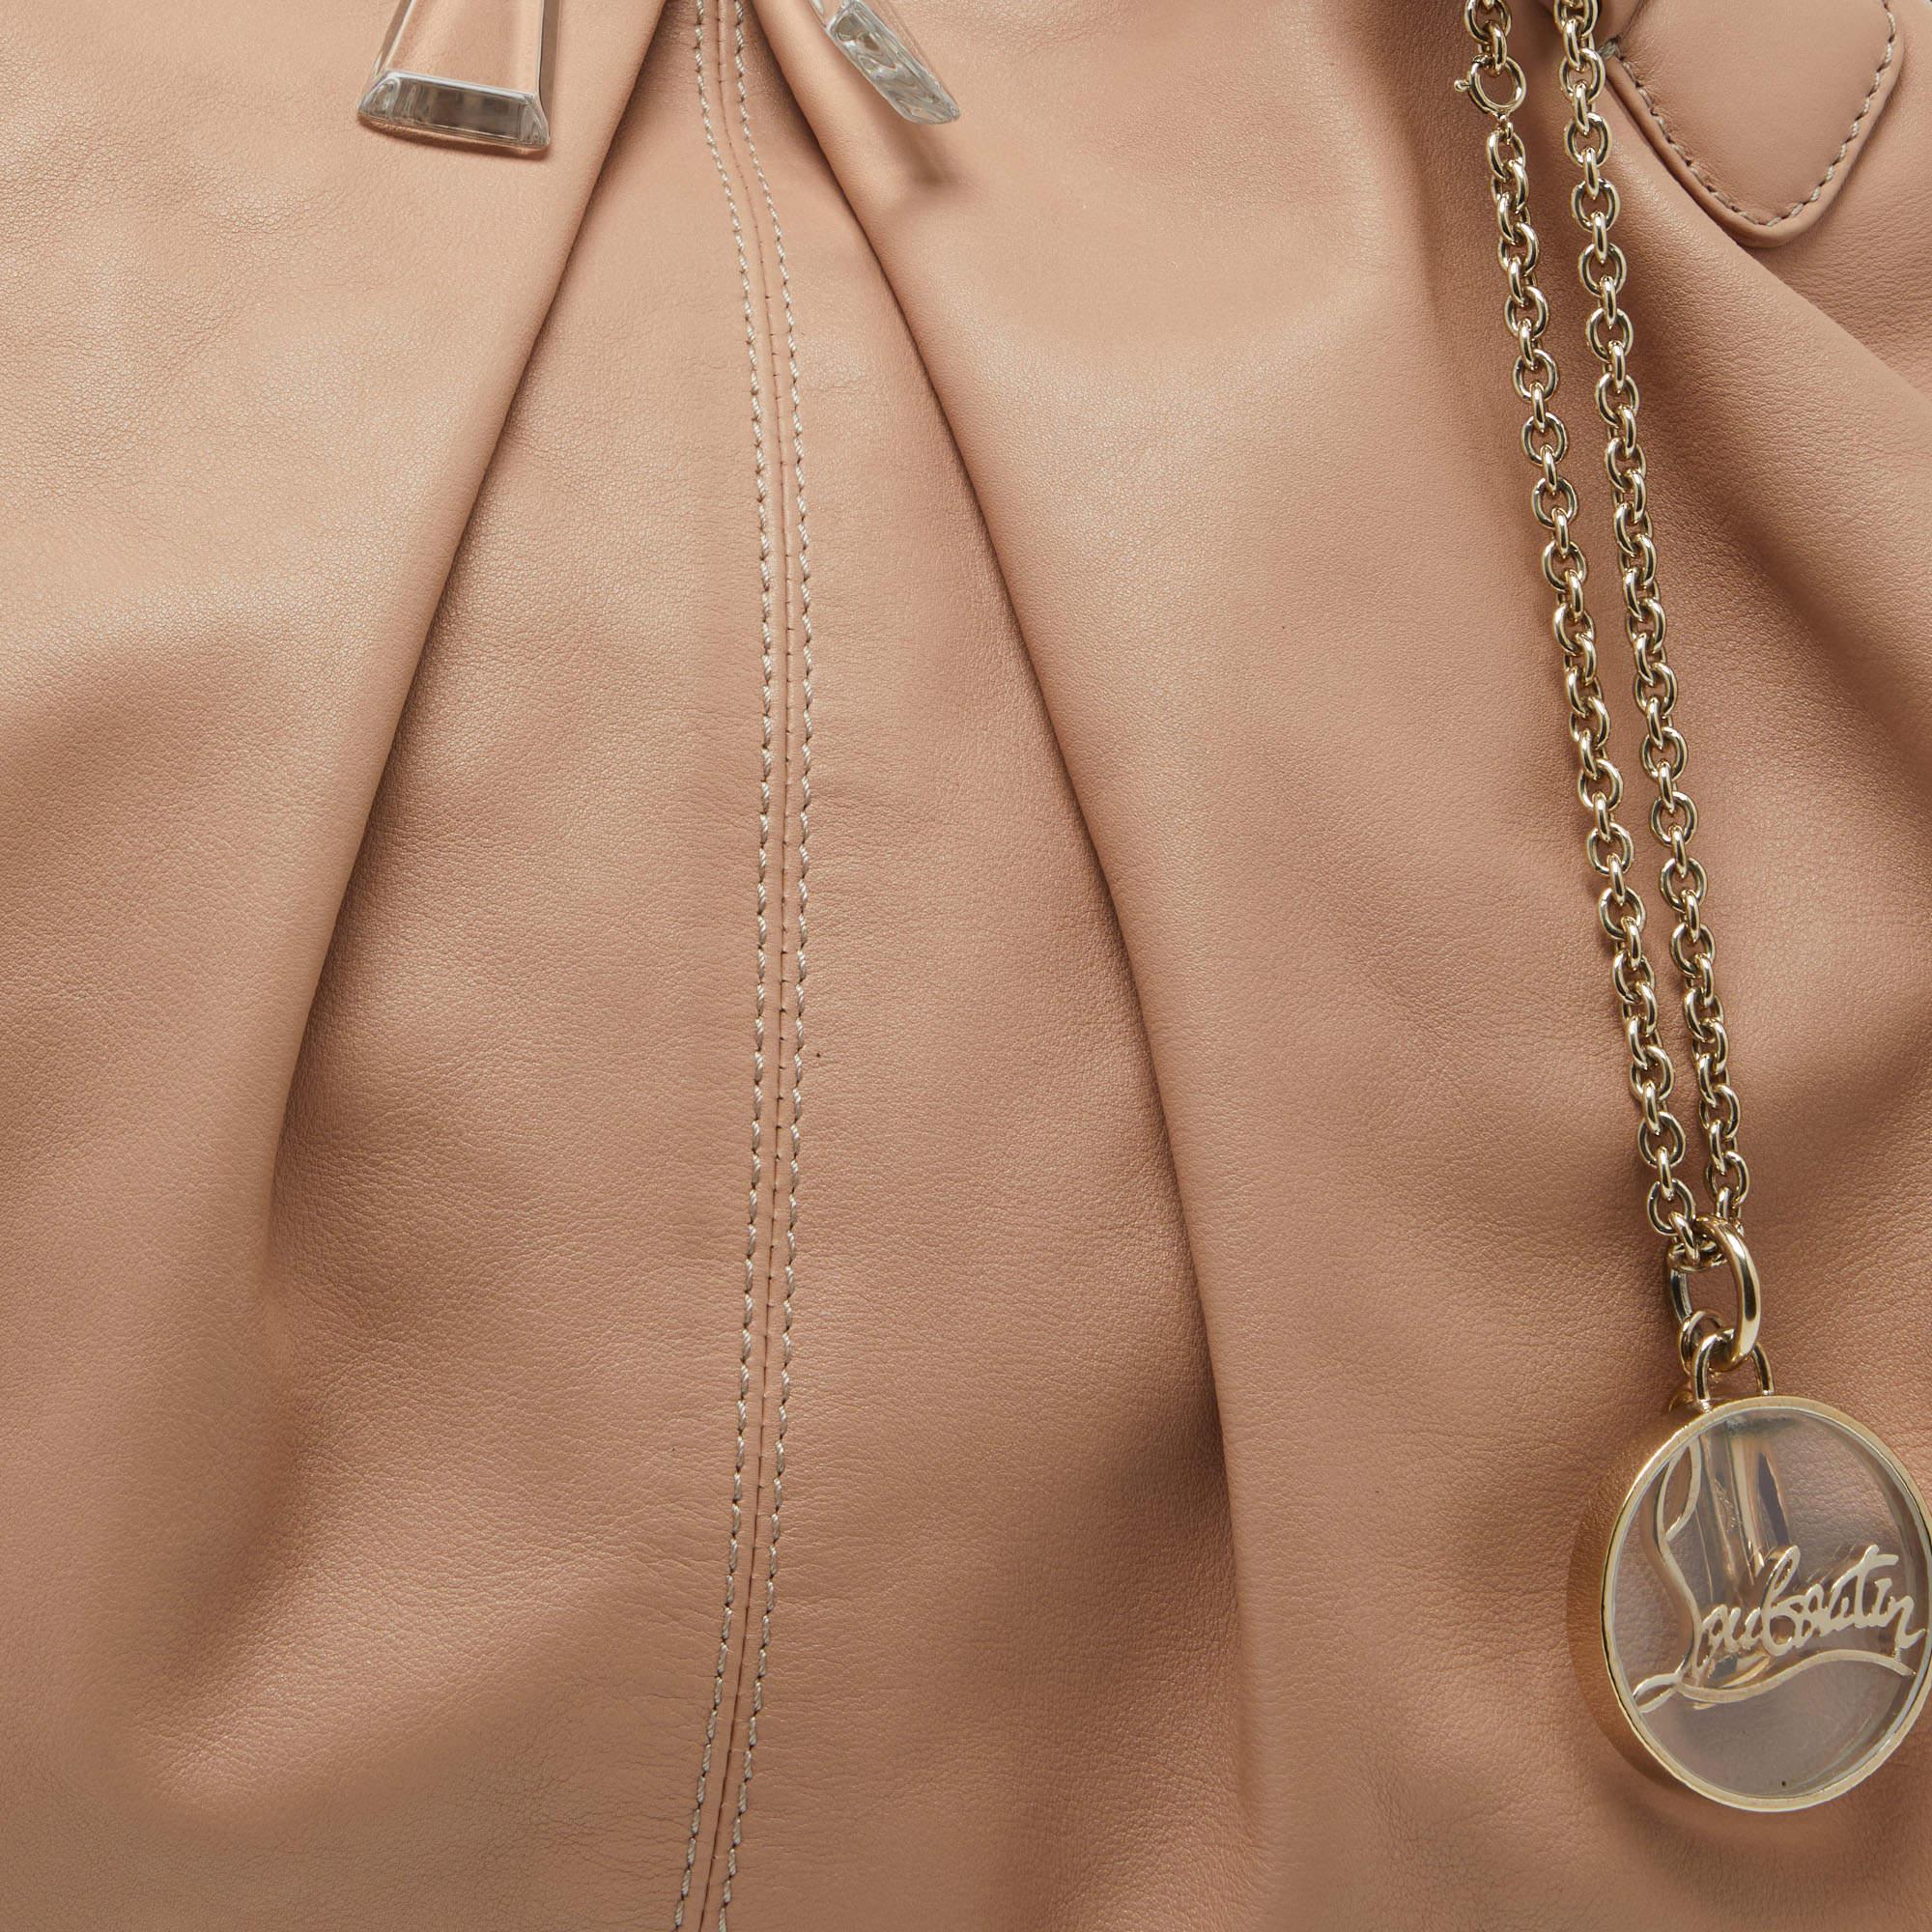 Women's Christian Louboutin Beige Leather Zip Satchel For Sale